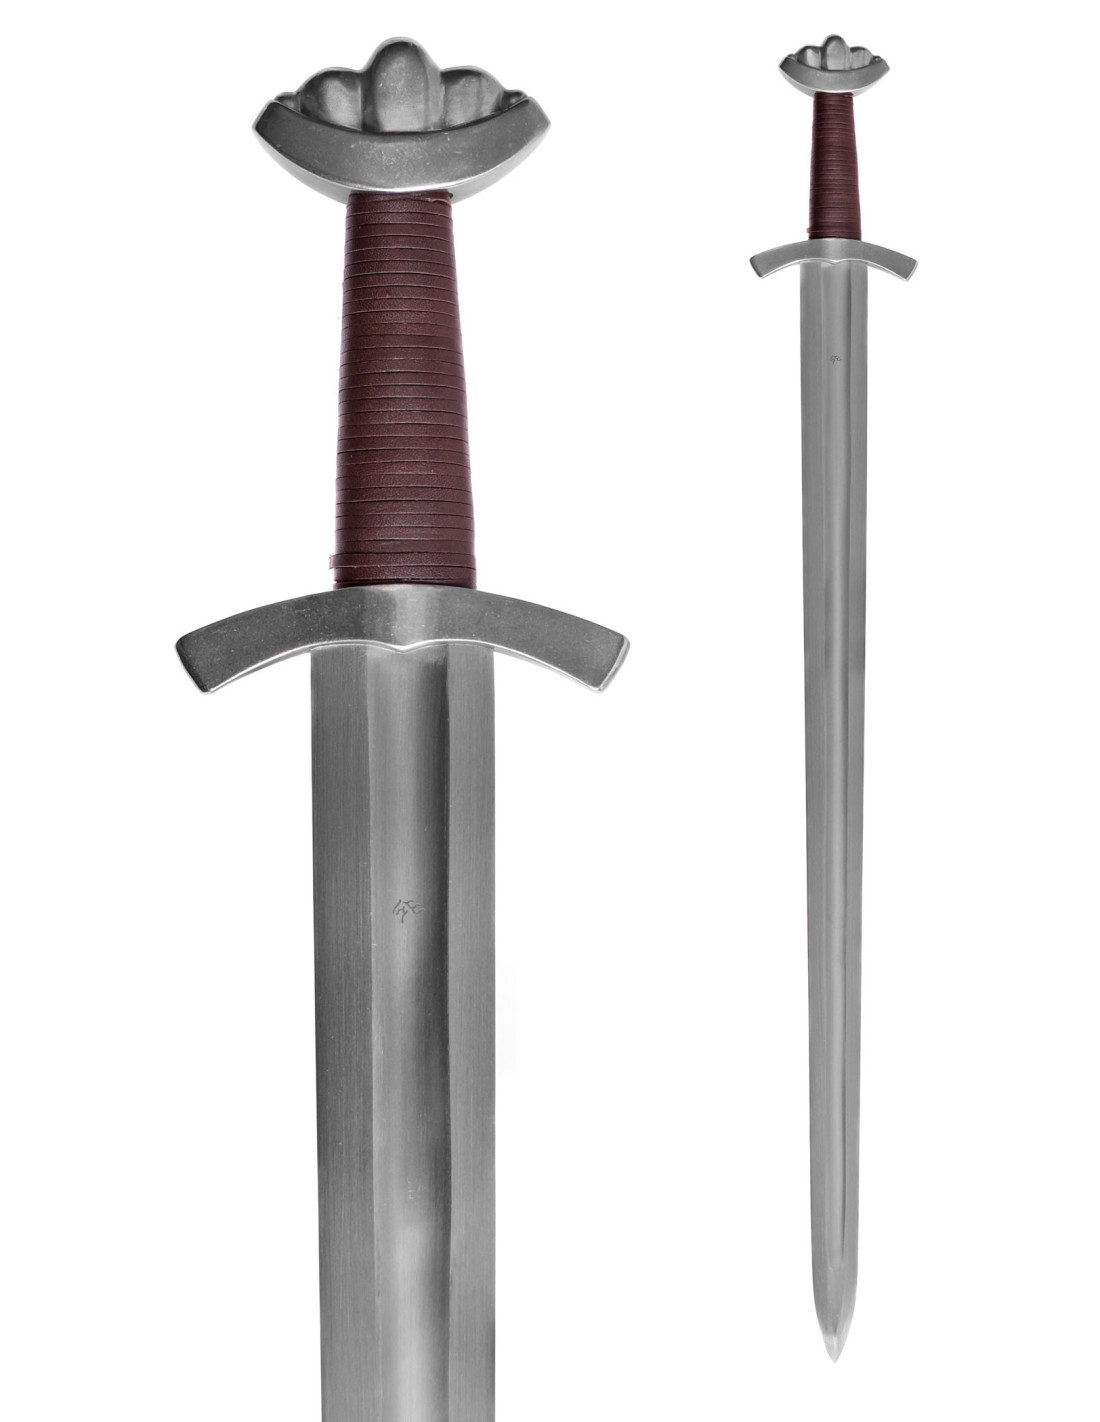 HN-SH2457 Espada Vikinga de Cawood, siglo XI